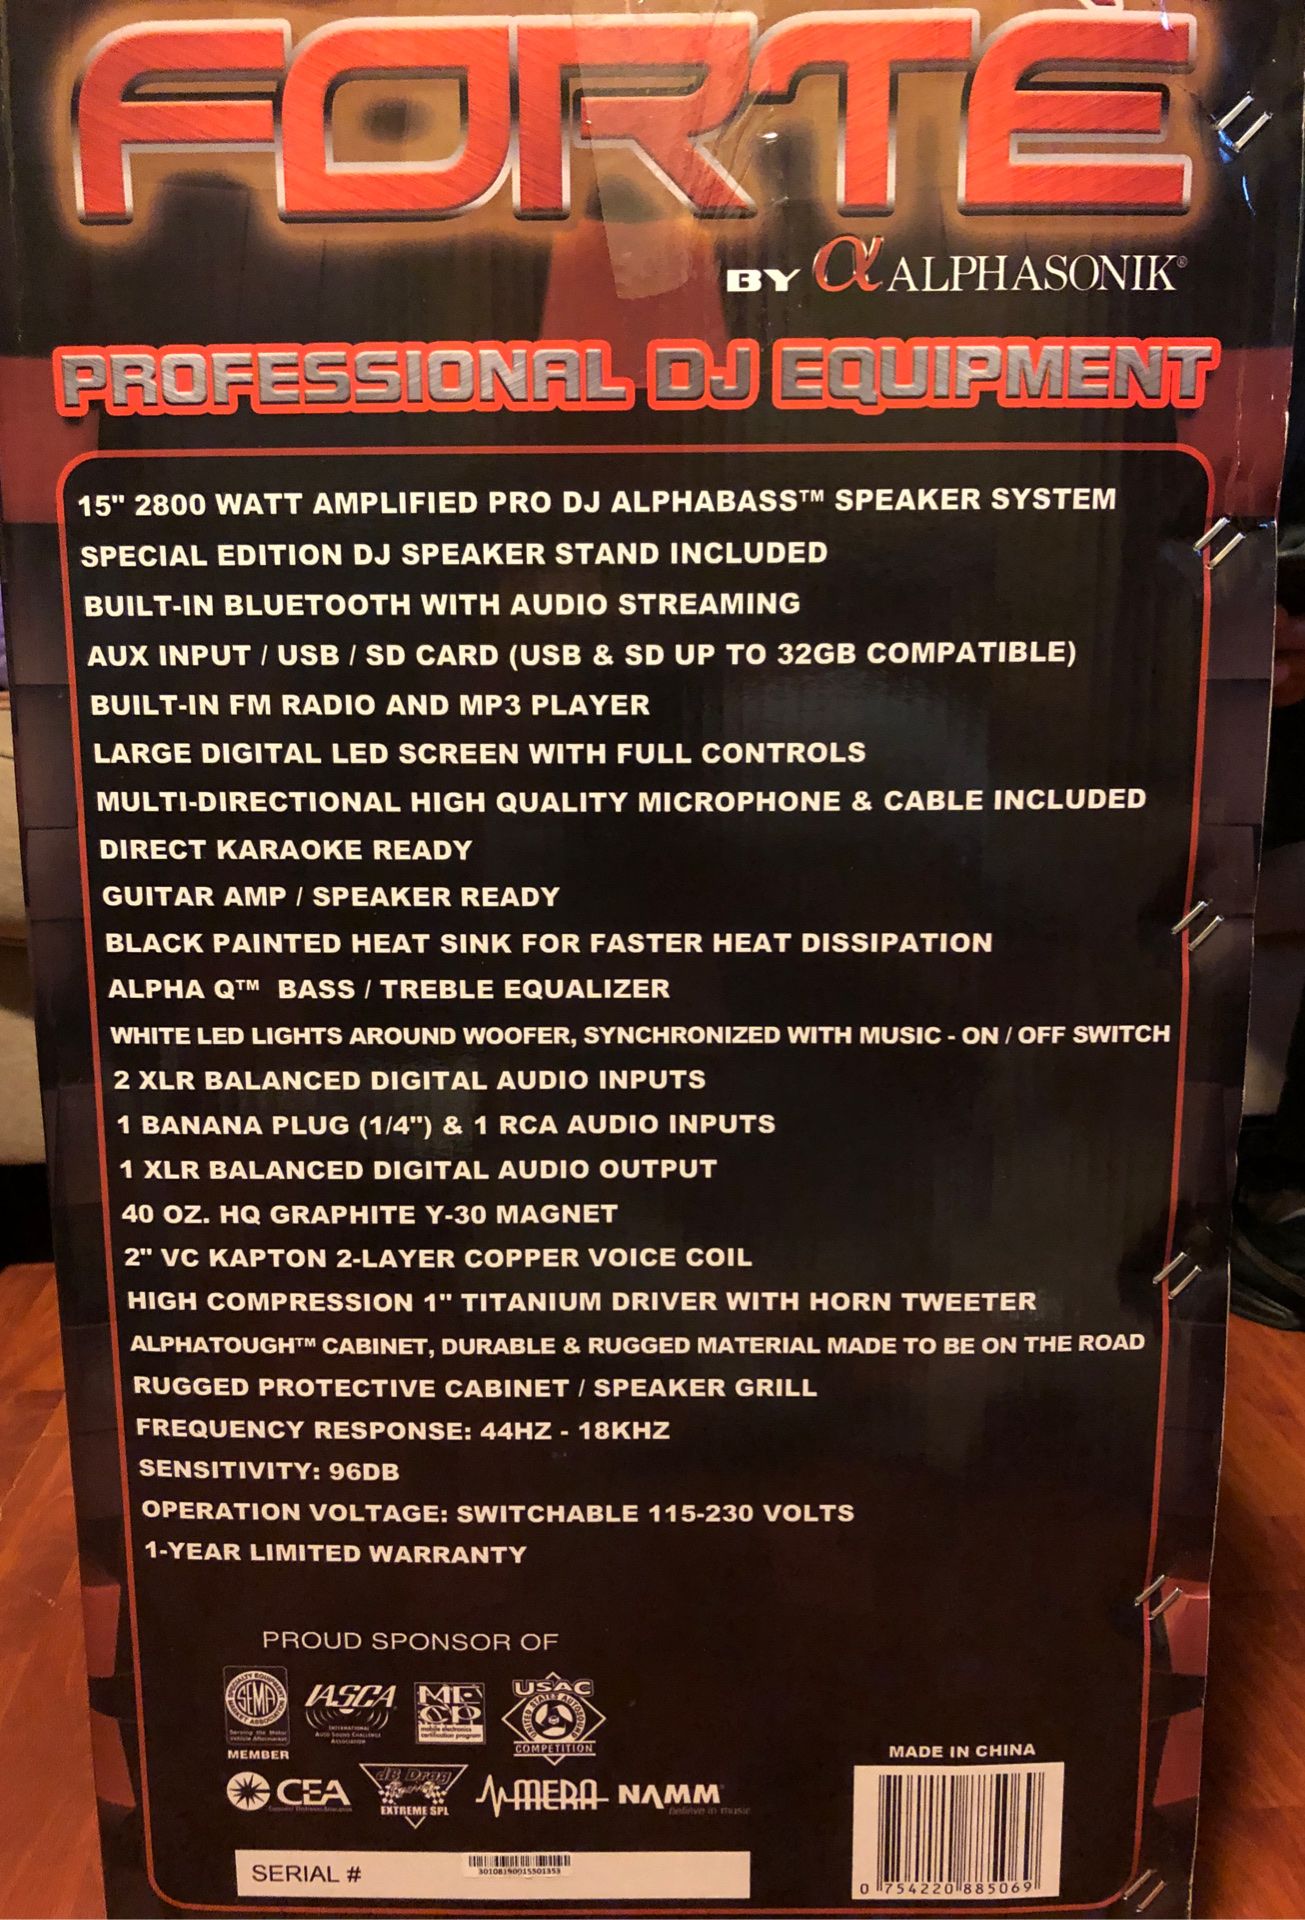 Professional dj equipment